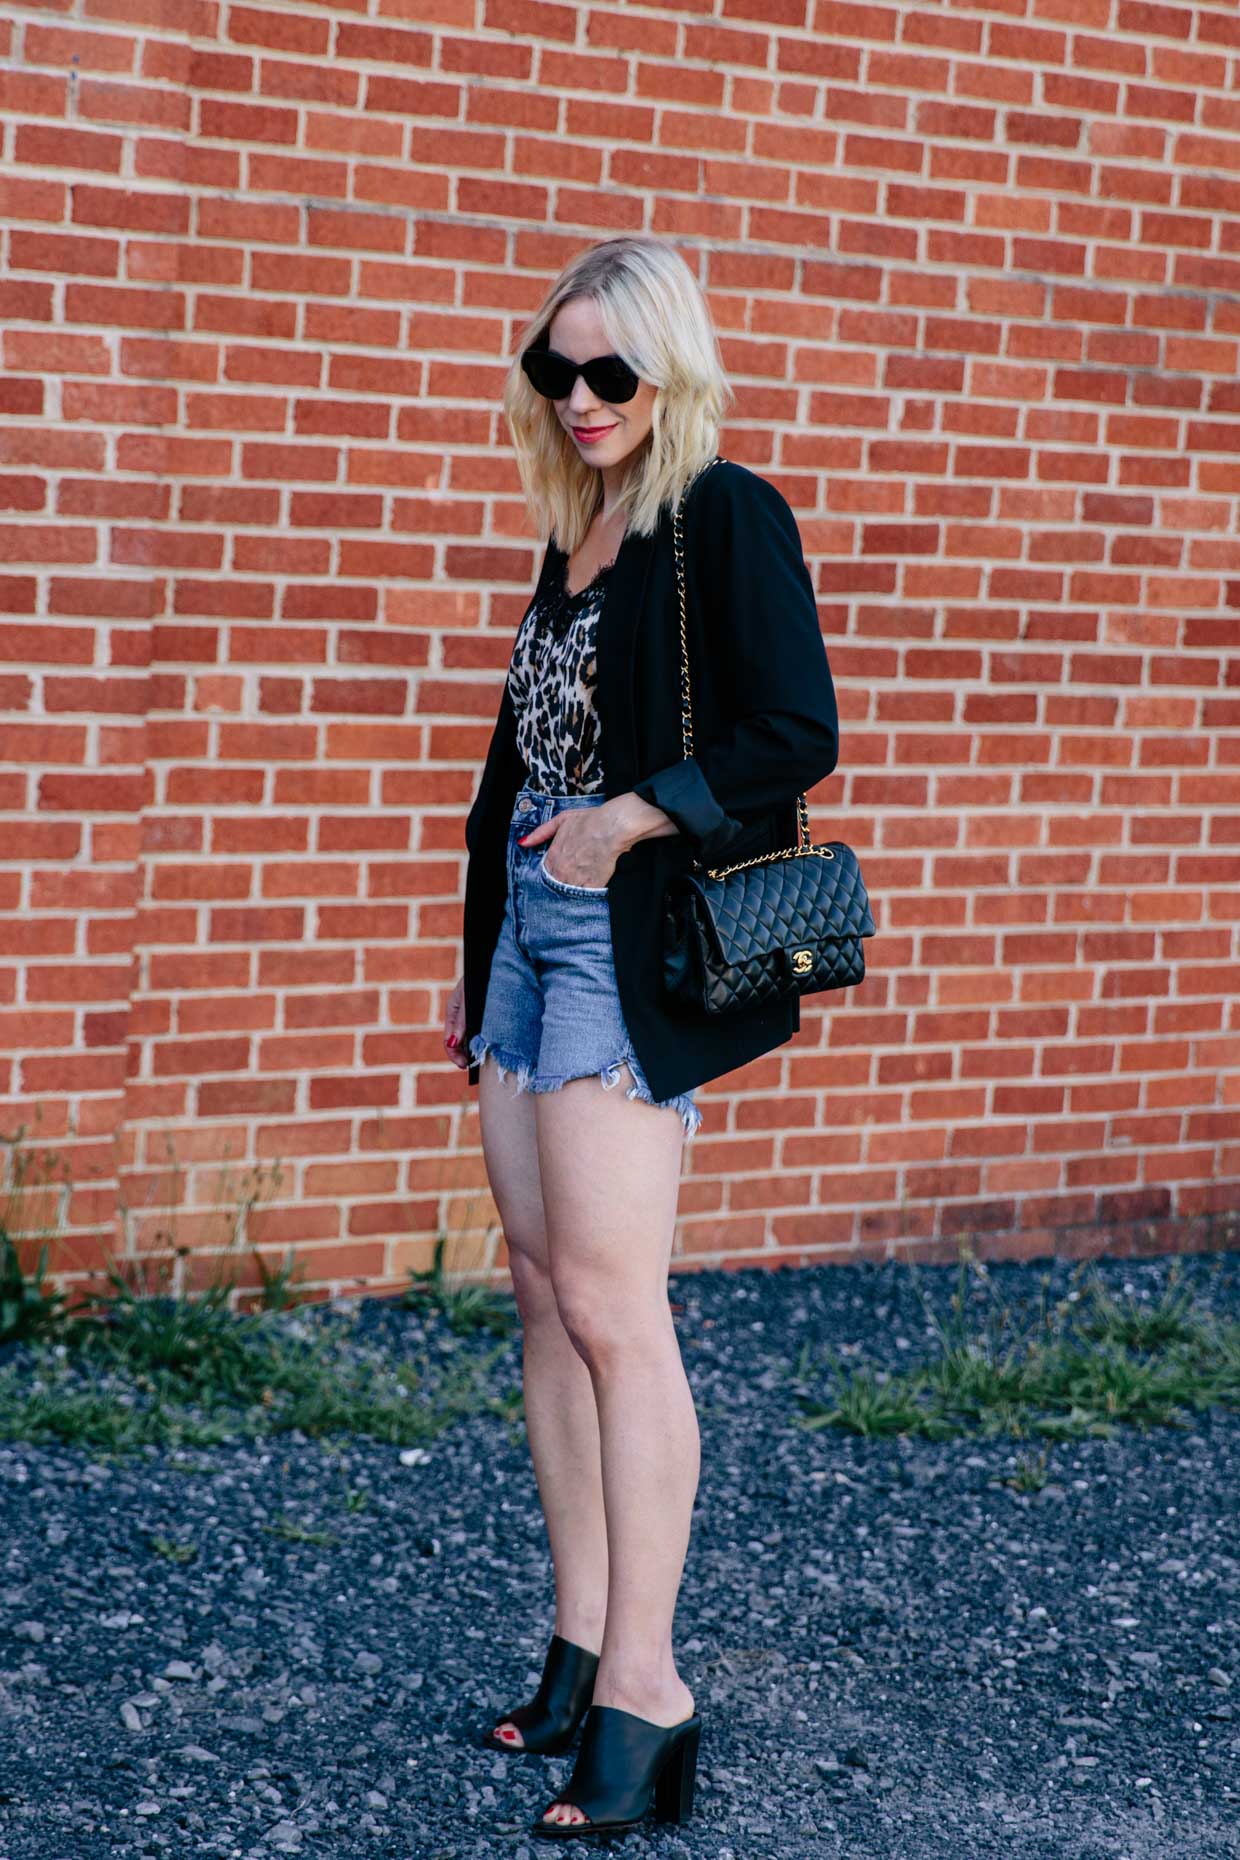 Meagan Brandon fashion blogger of Meagan's Moda wears black